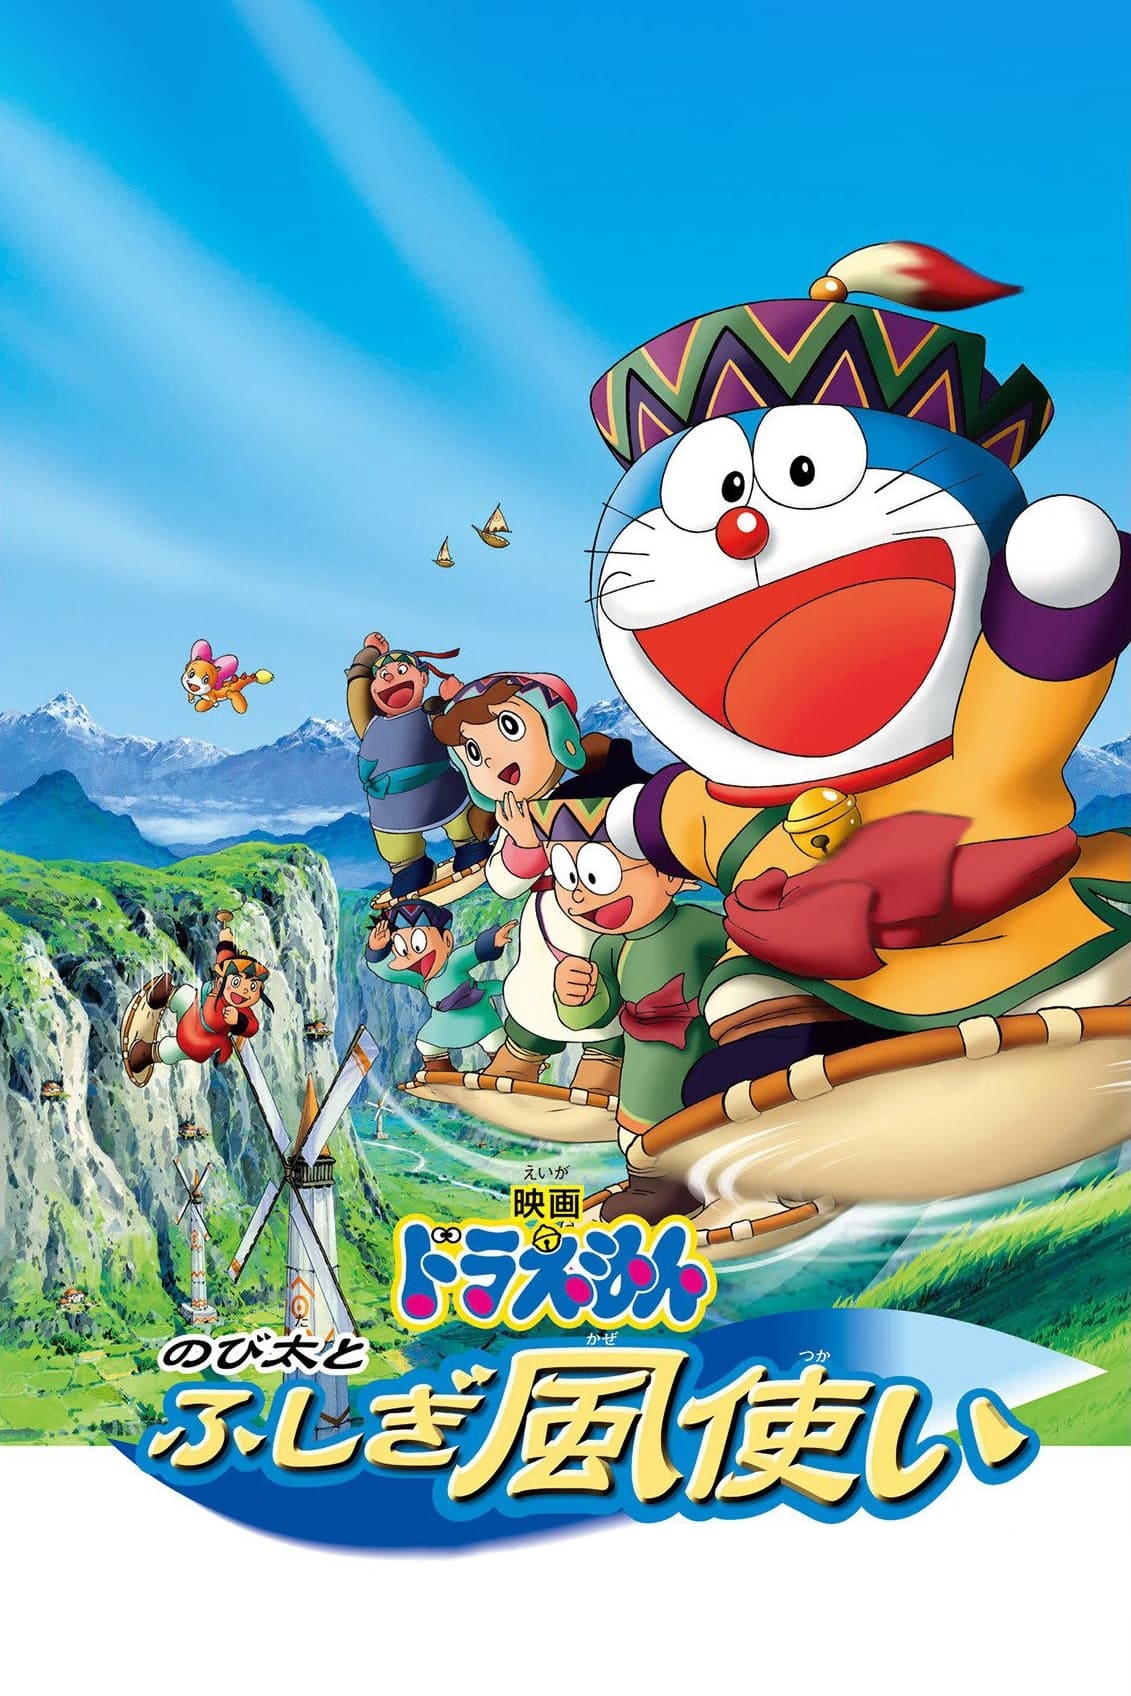 Actor doraemon voice Doraemon